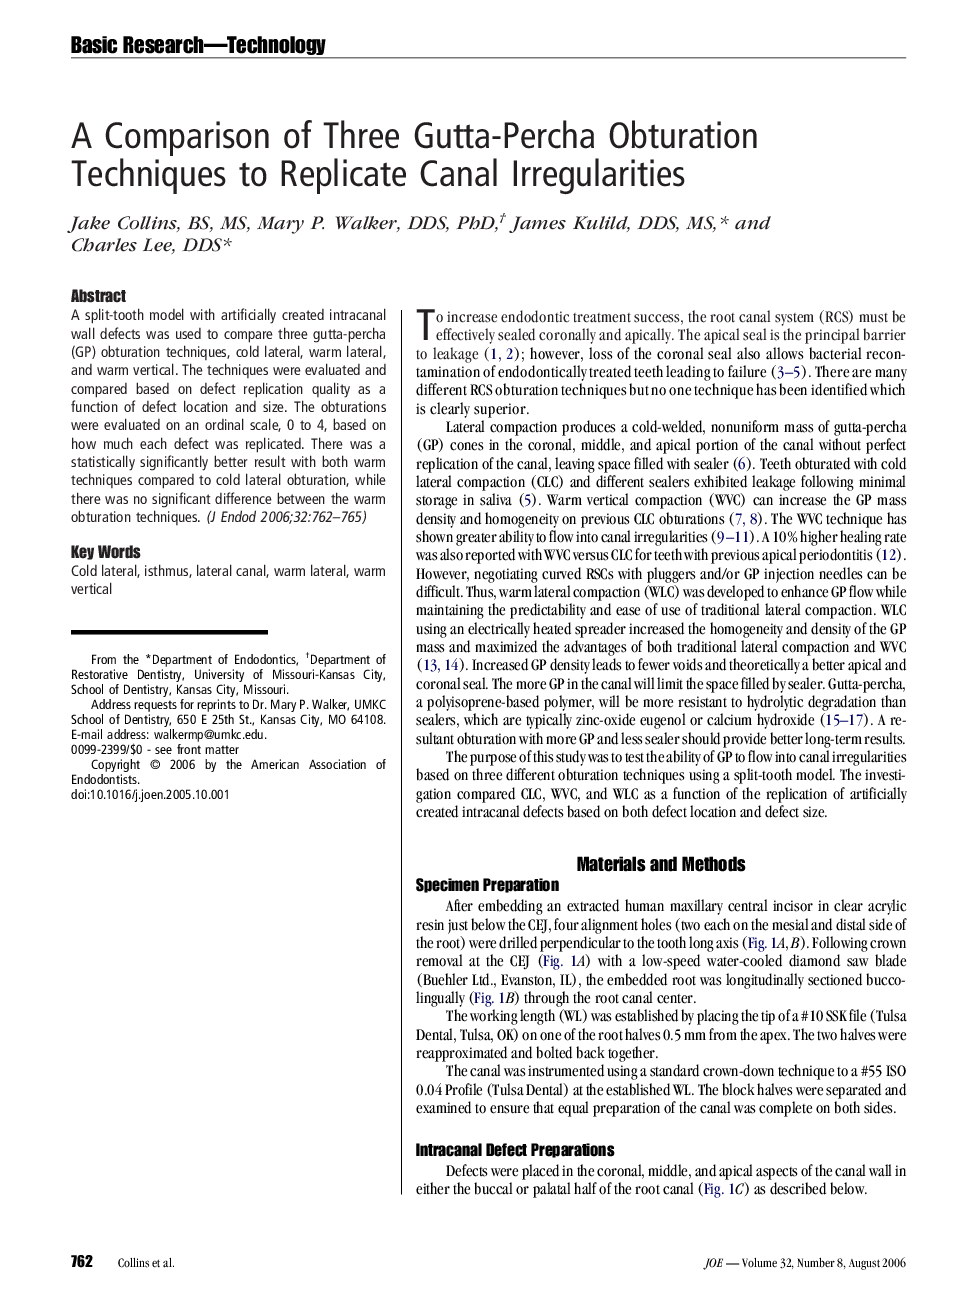 A Comparison of Three Gutta-Percha Obturation Techniques to Replicate Canal Irregularities